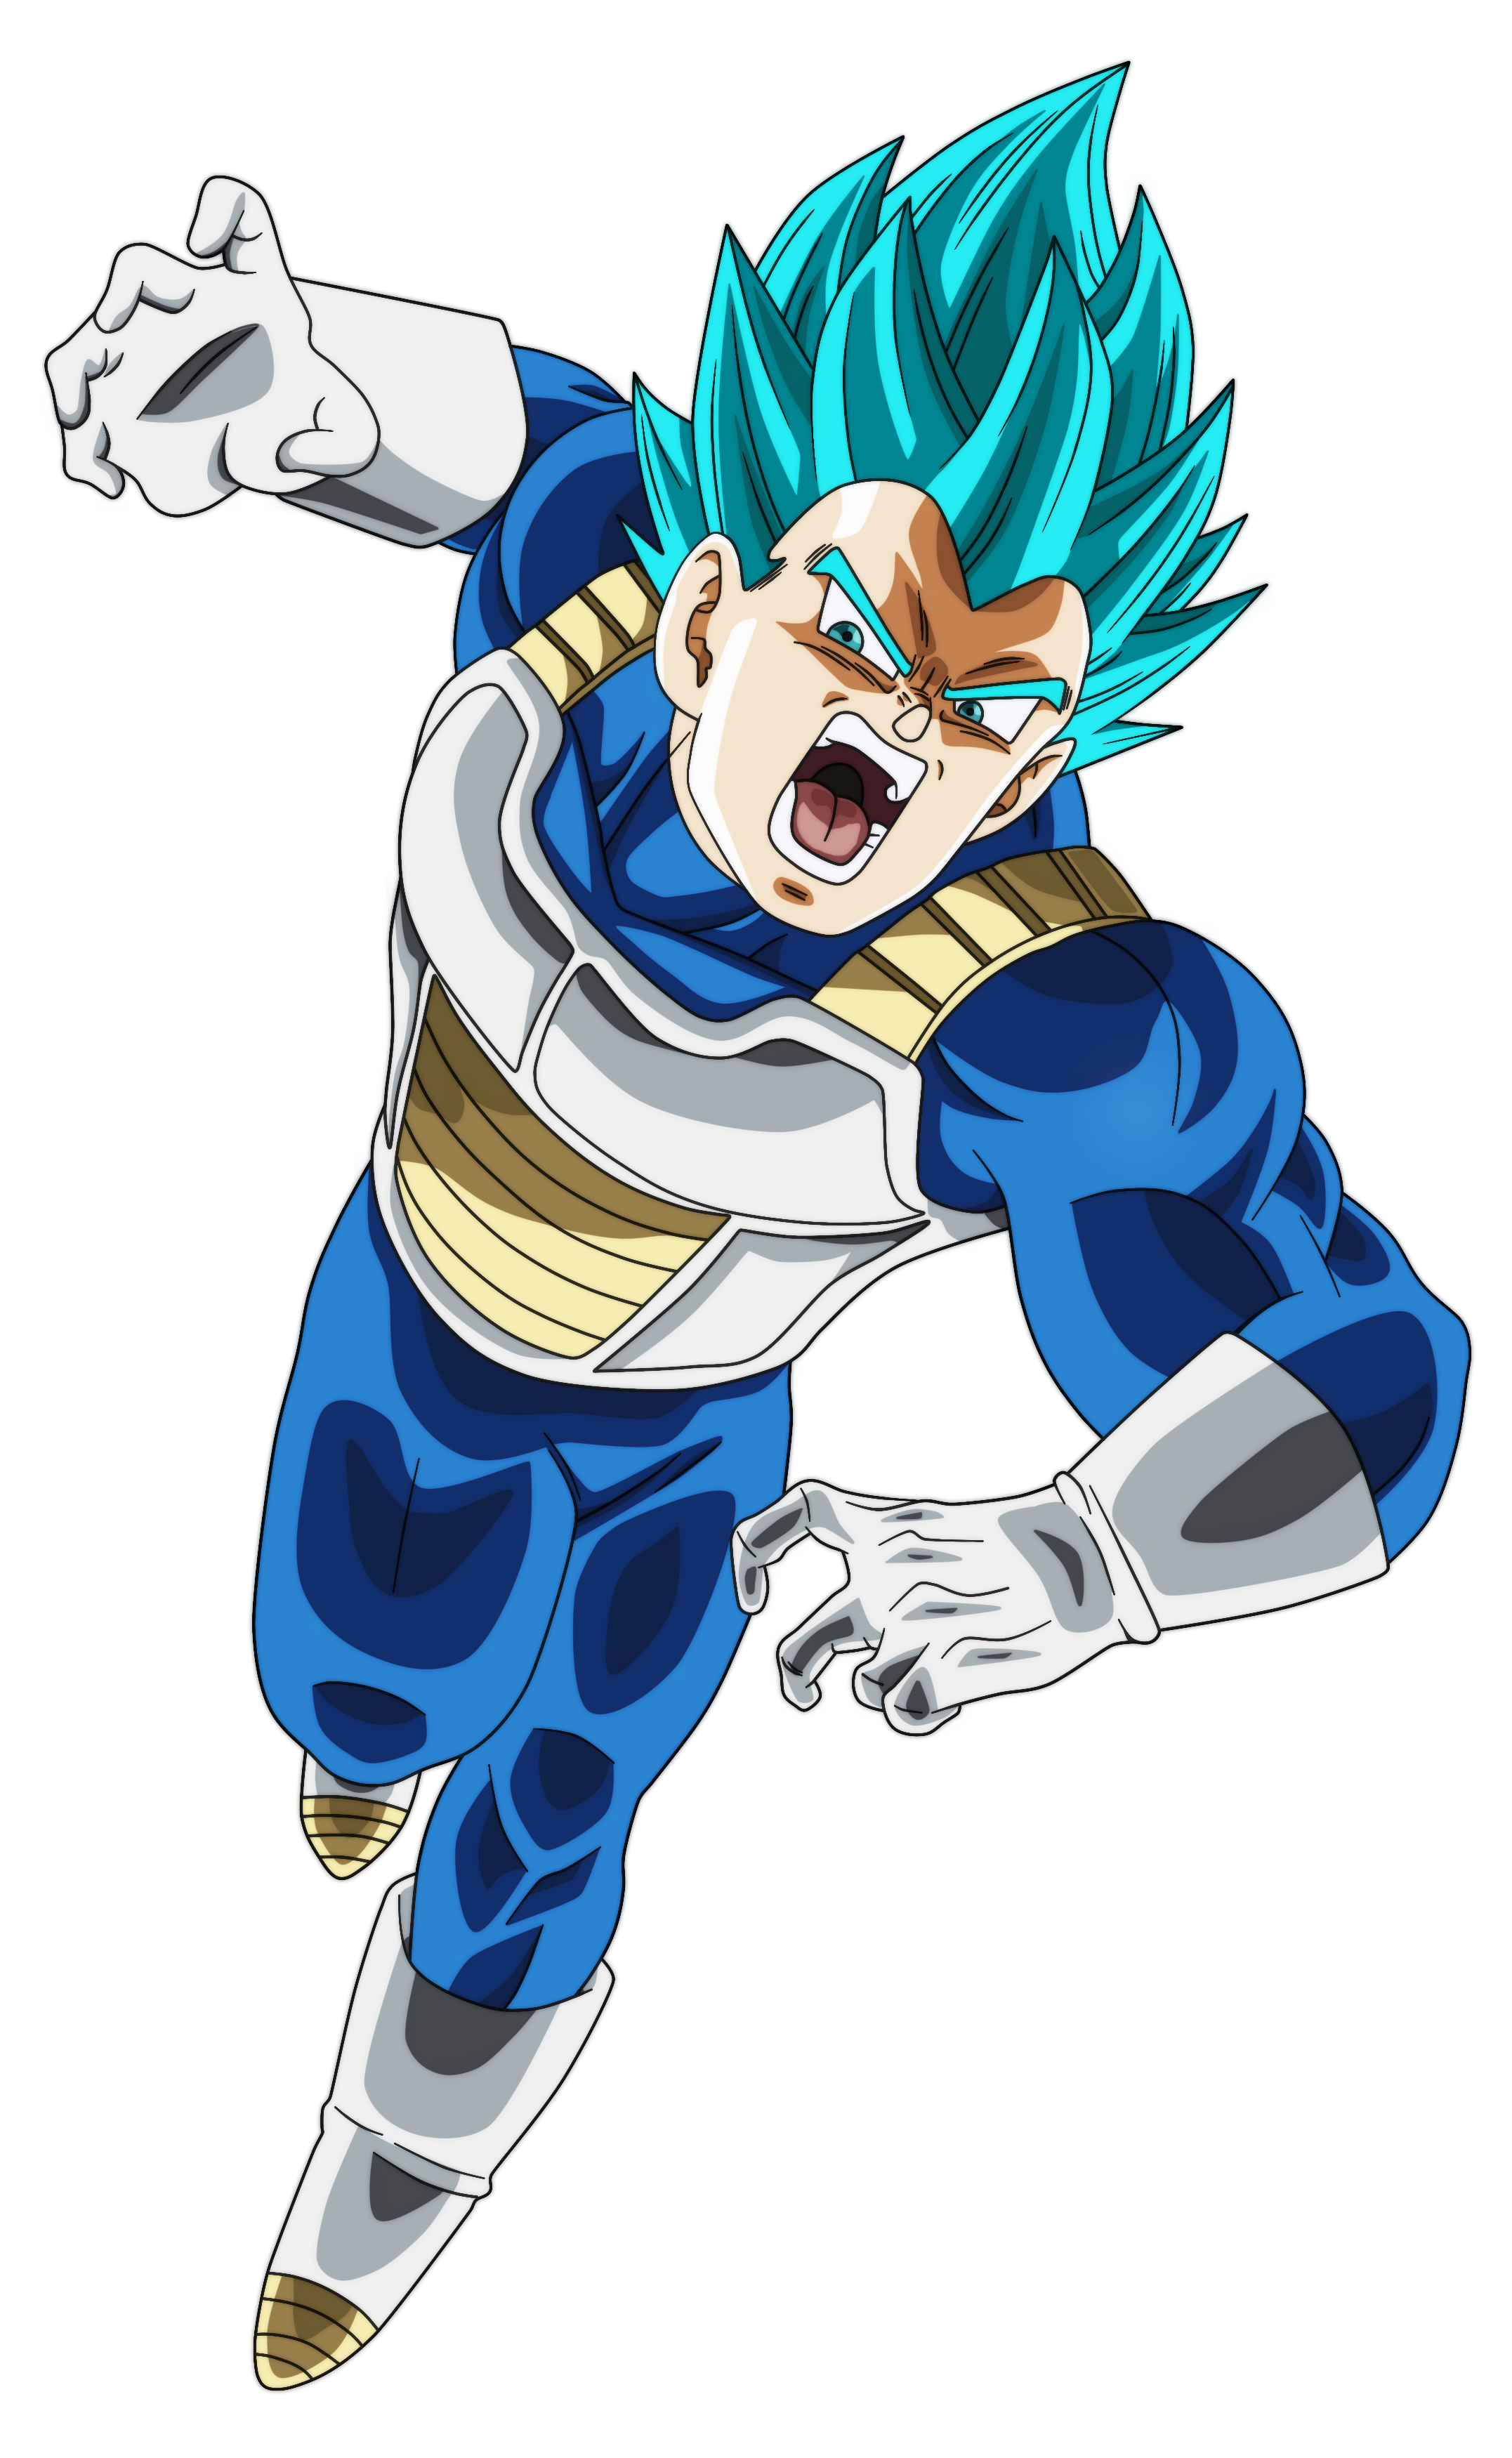 Goku Ssj Blue Dragon Ball Super Broly by Andrewdb13 on DeviantArt